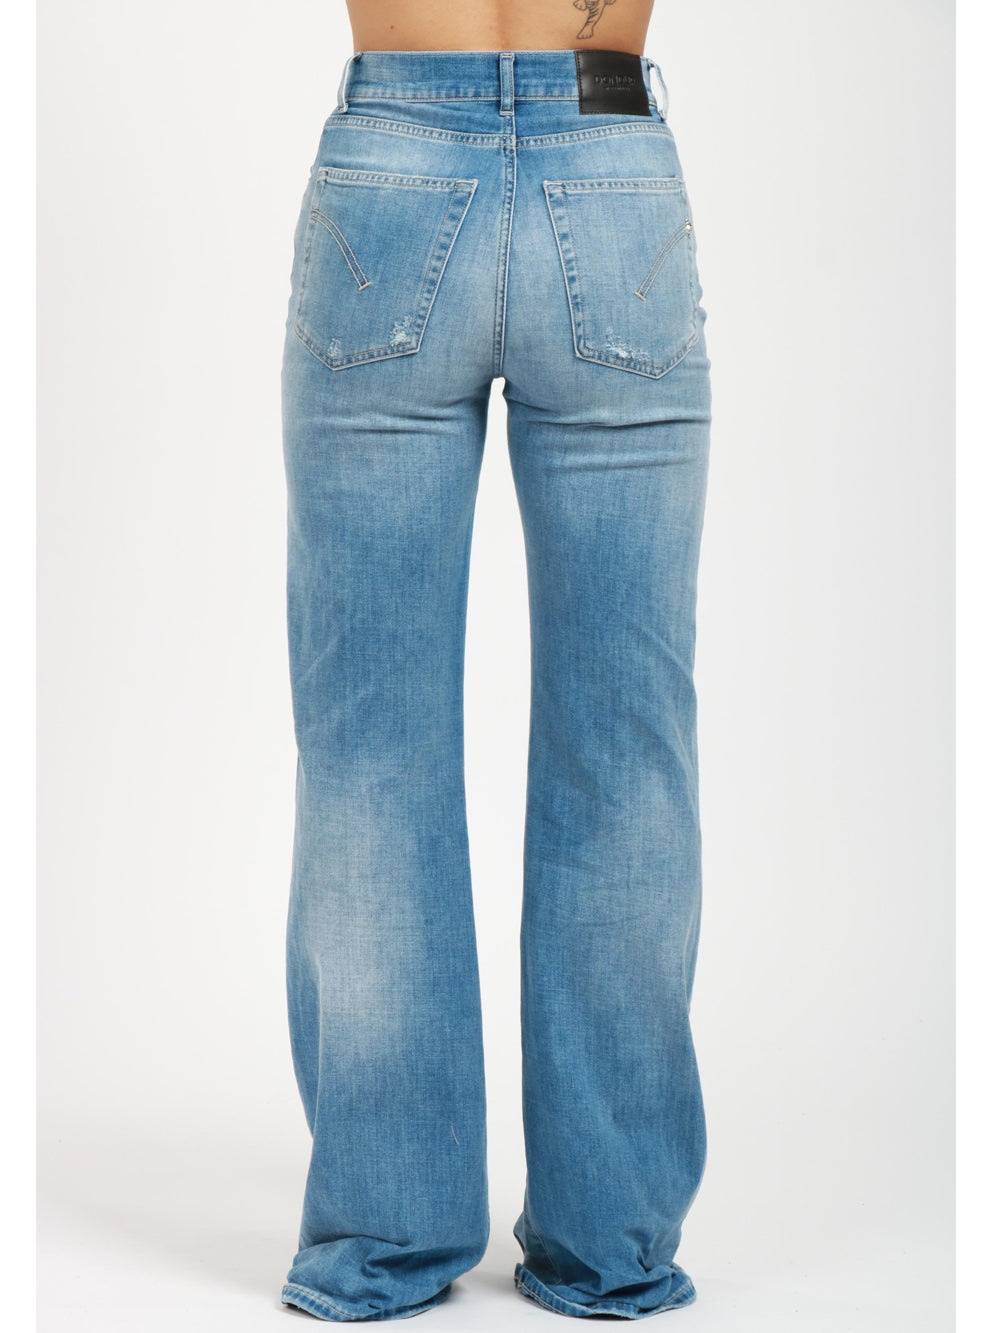 DONDUP Jeans Amber Palazzo in Denim Blu con Rotture Denim chiaro